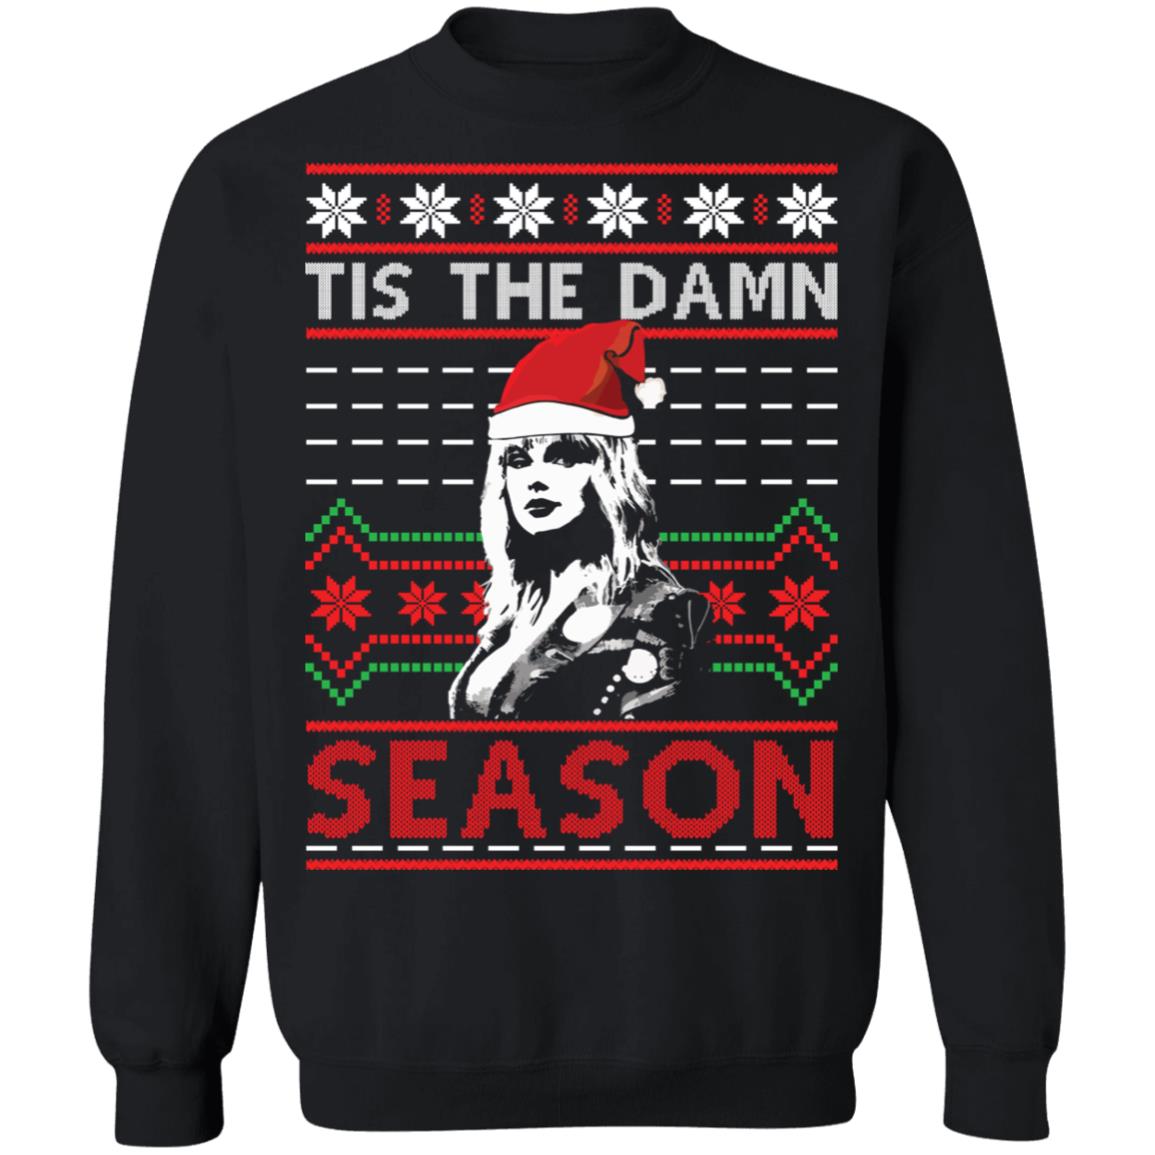 Taylor Tis The Damn Season Christmas Sweater